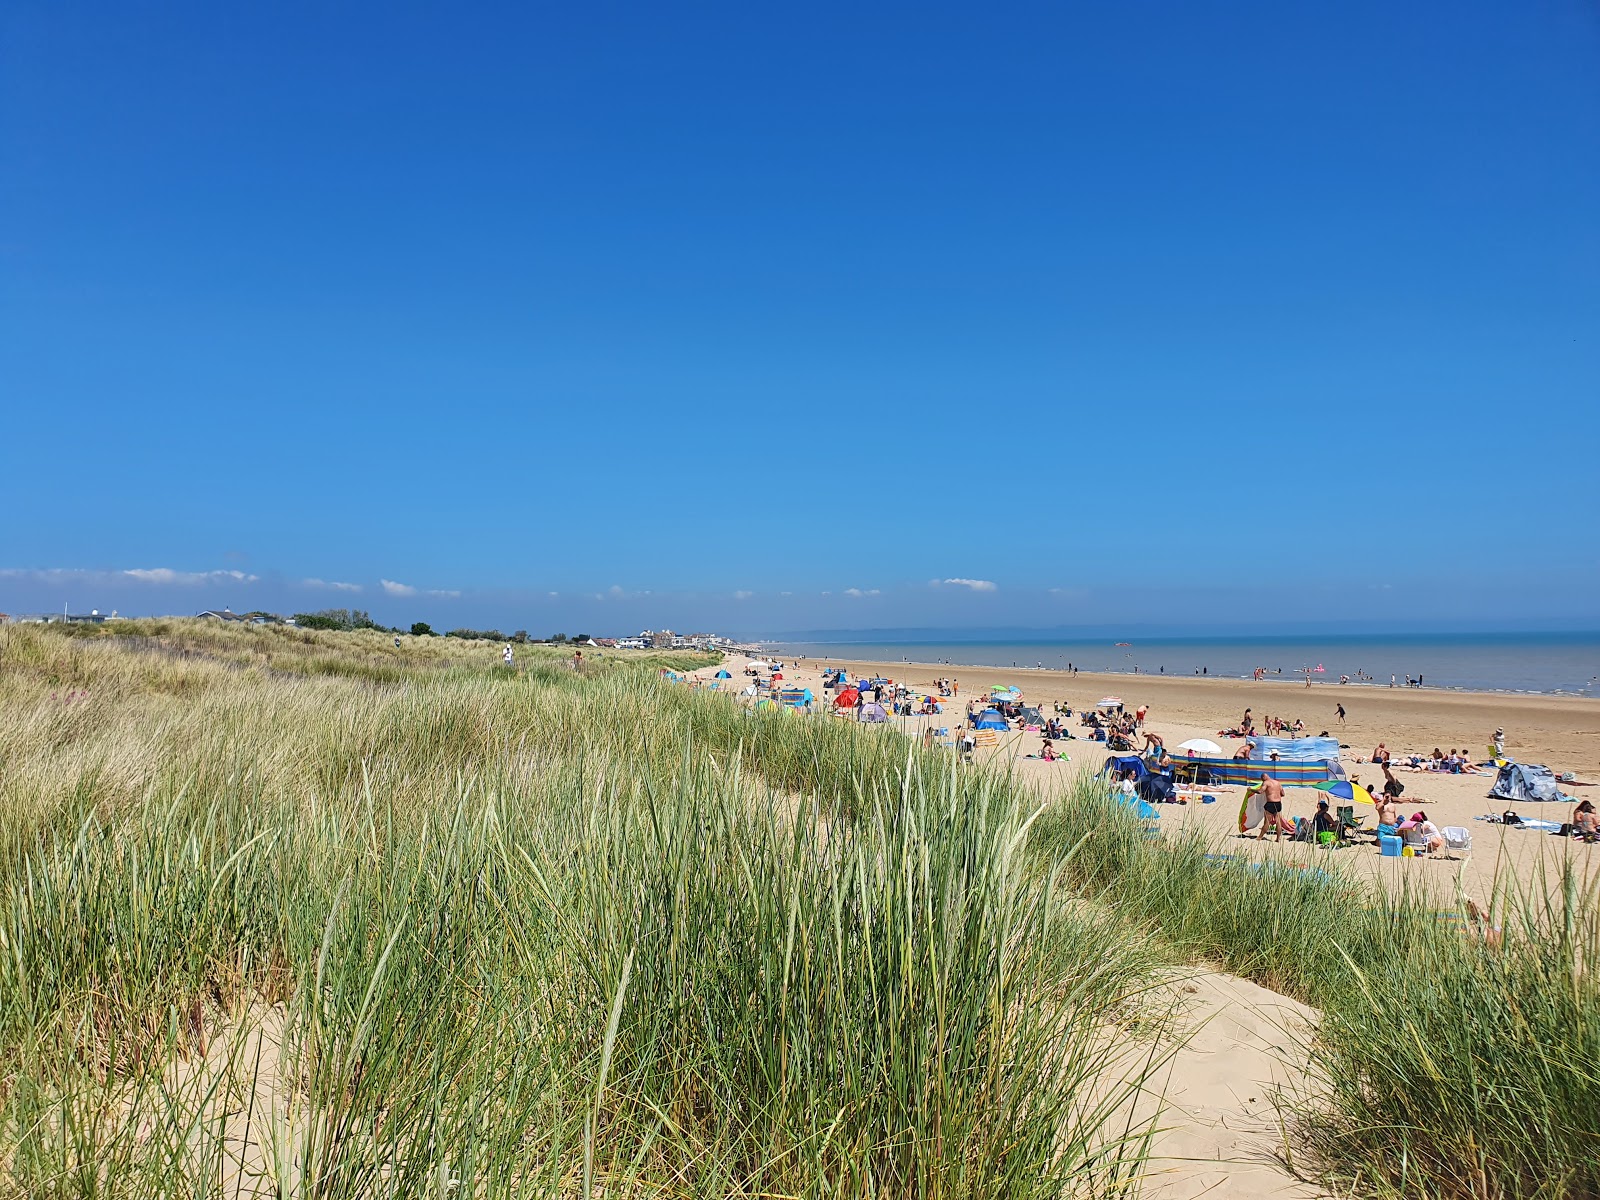 Foto de Greatstone beach - lugar popular entre os apreciadores de relaxamento